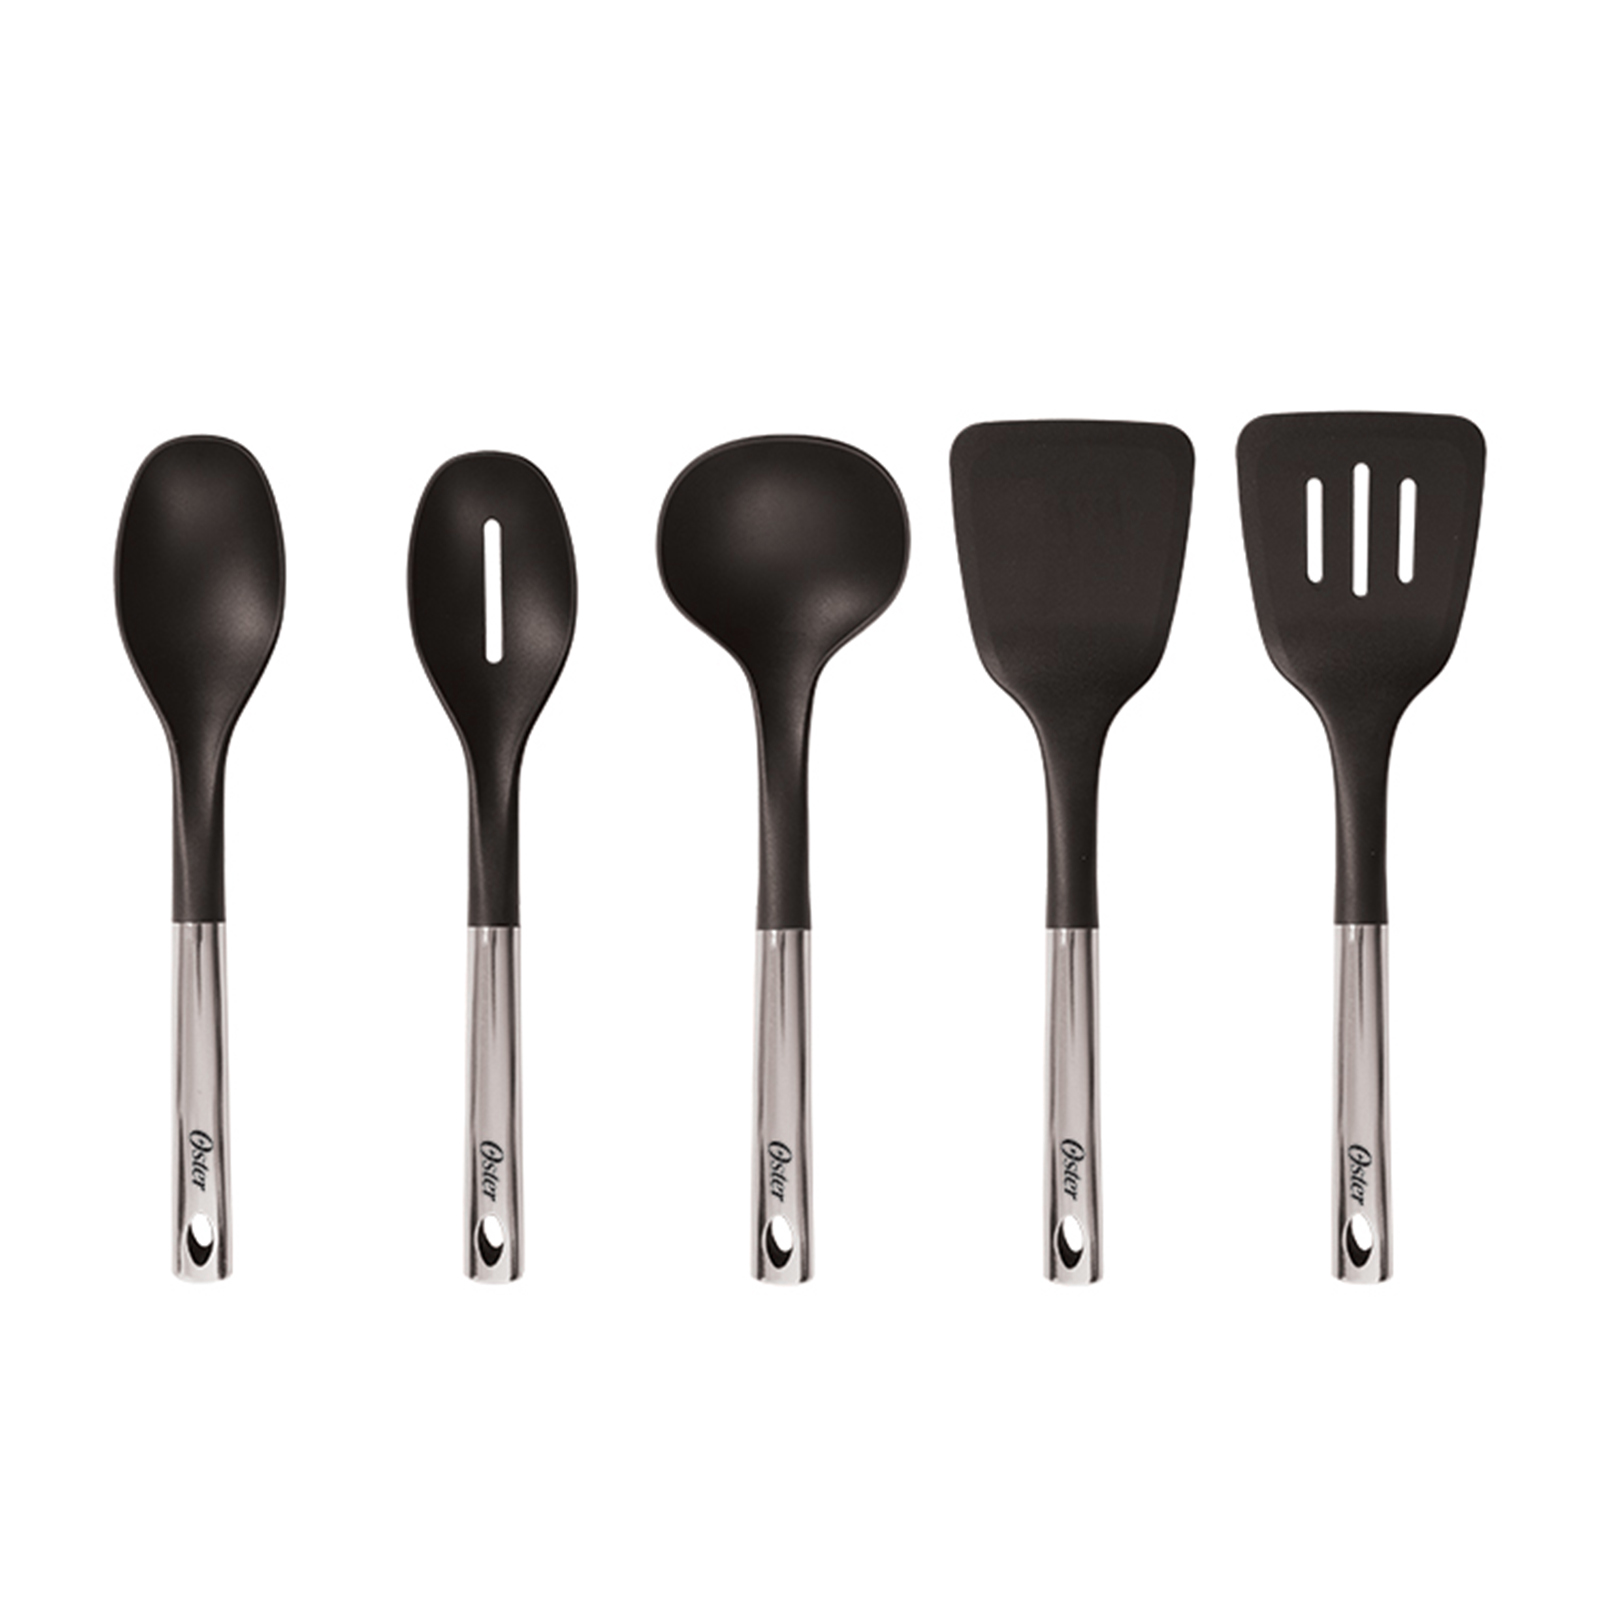 Oster  Kitchen Bliss 5 piece Kitchen Tools Set in Black